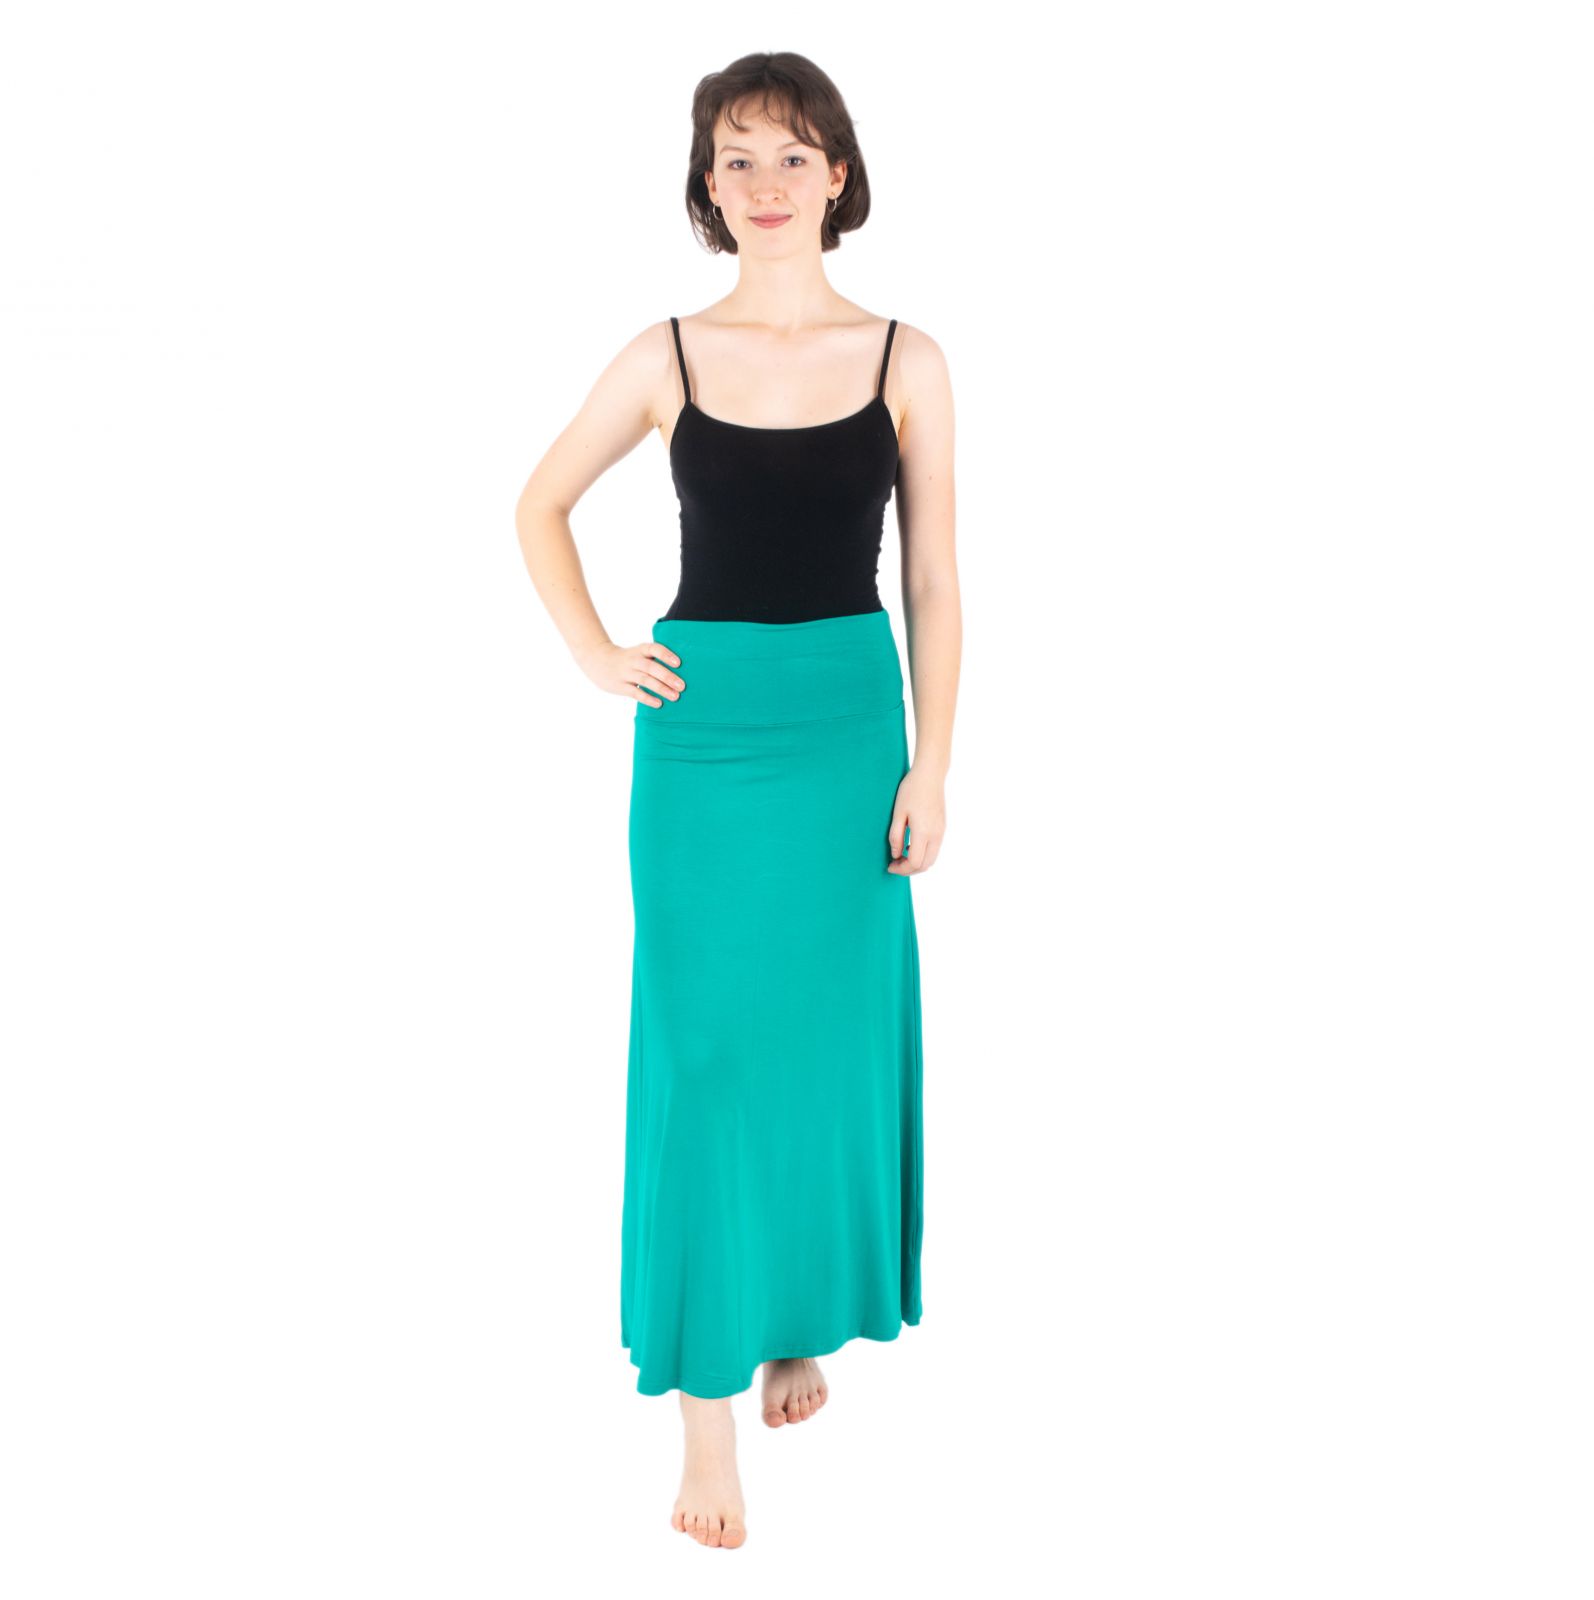 Long single colour skirt Panjang Persian Green Thailand